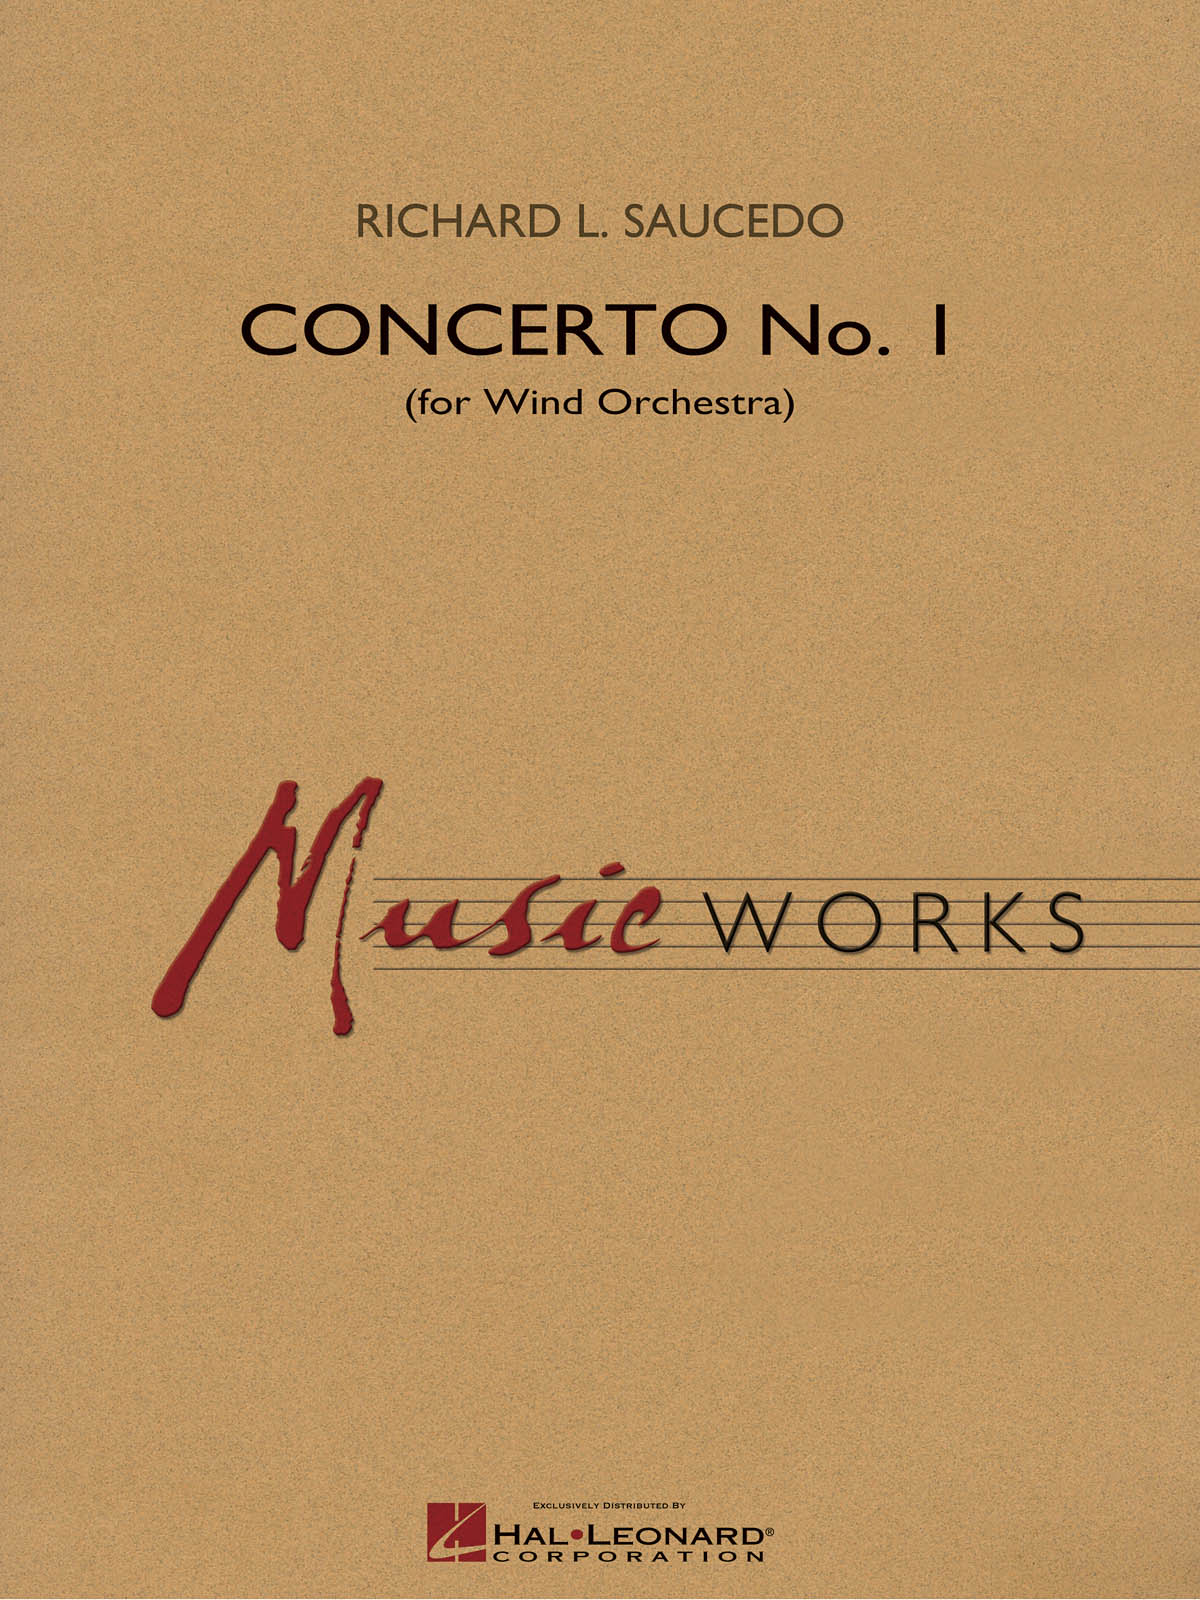 Richard L. Saucedo: Concerto No. 1 (for Wind Orchestra): Concert Band: Score